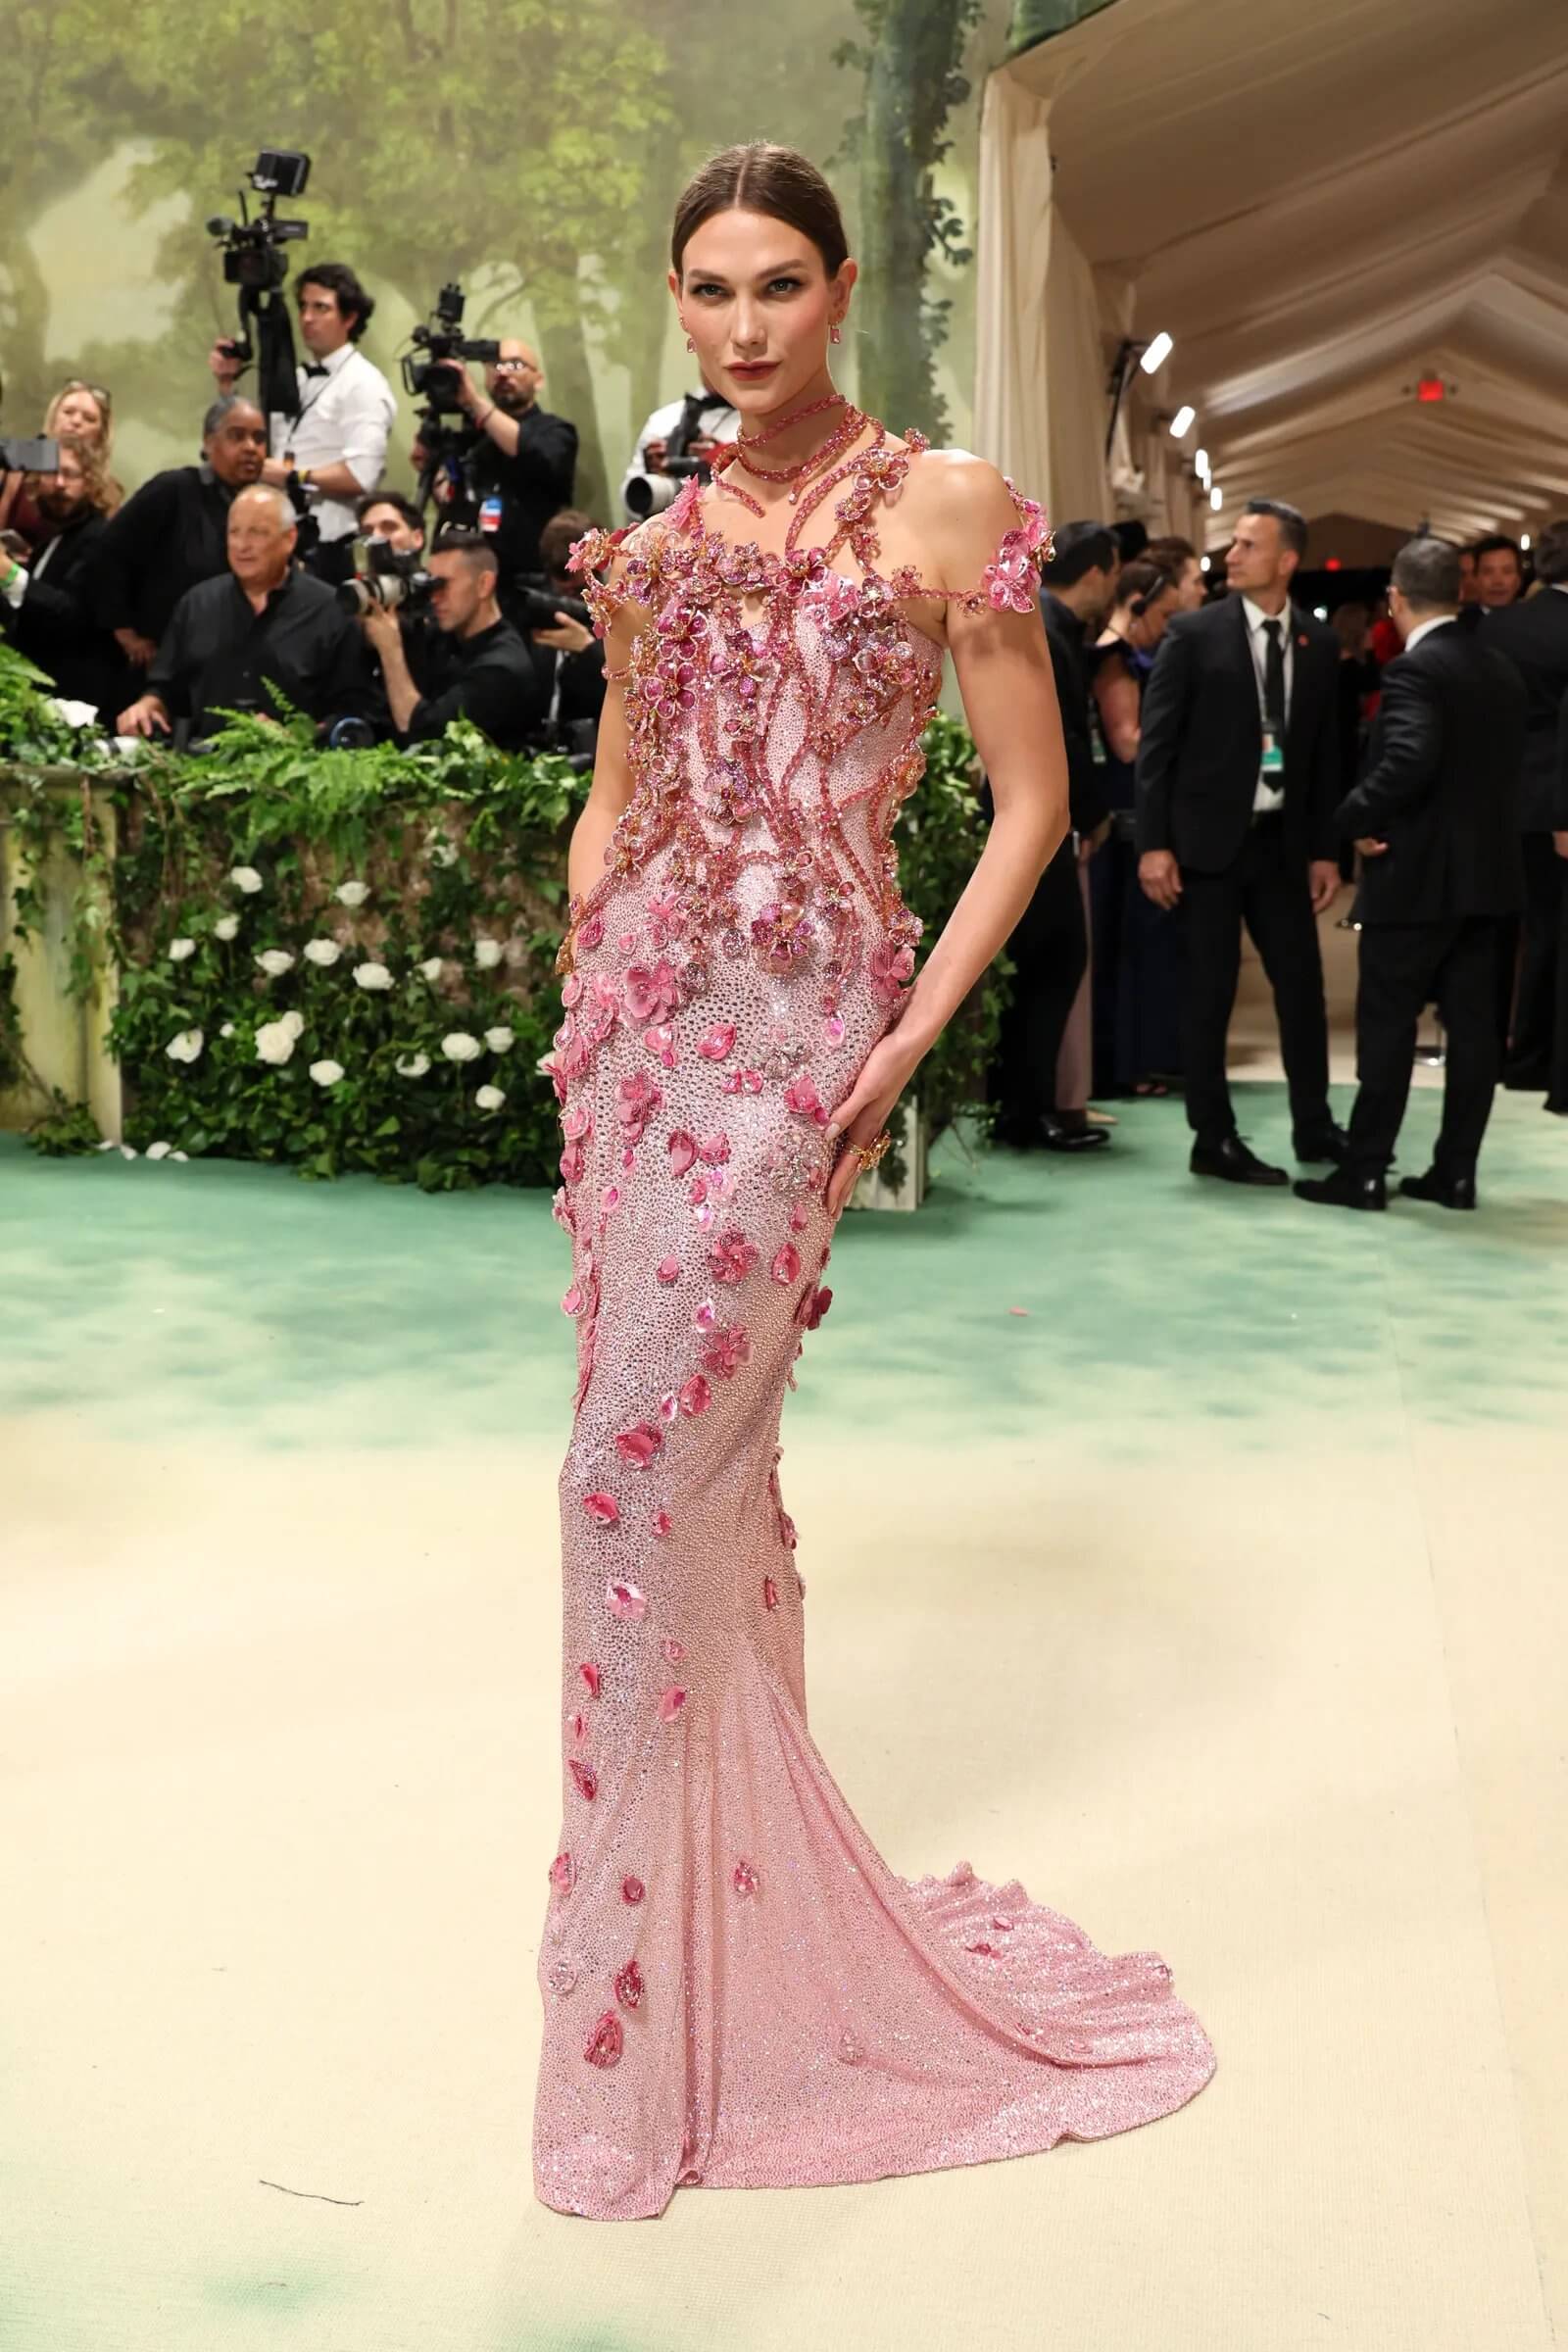 Karlie Kloss In Pink Floral Design Long Gown